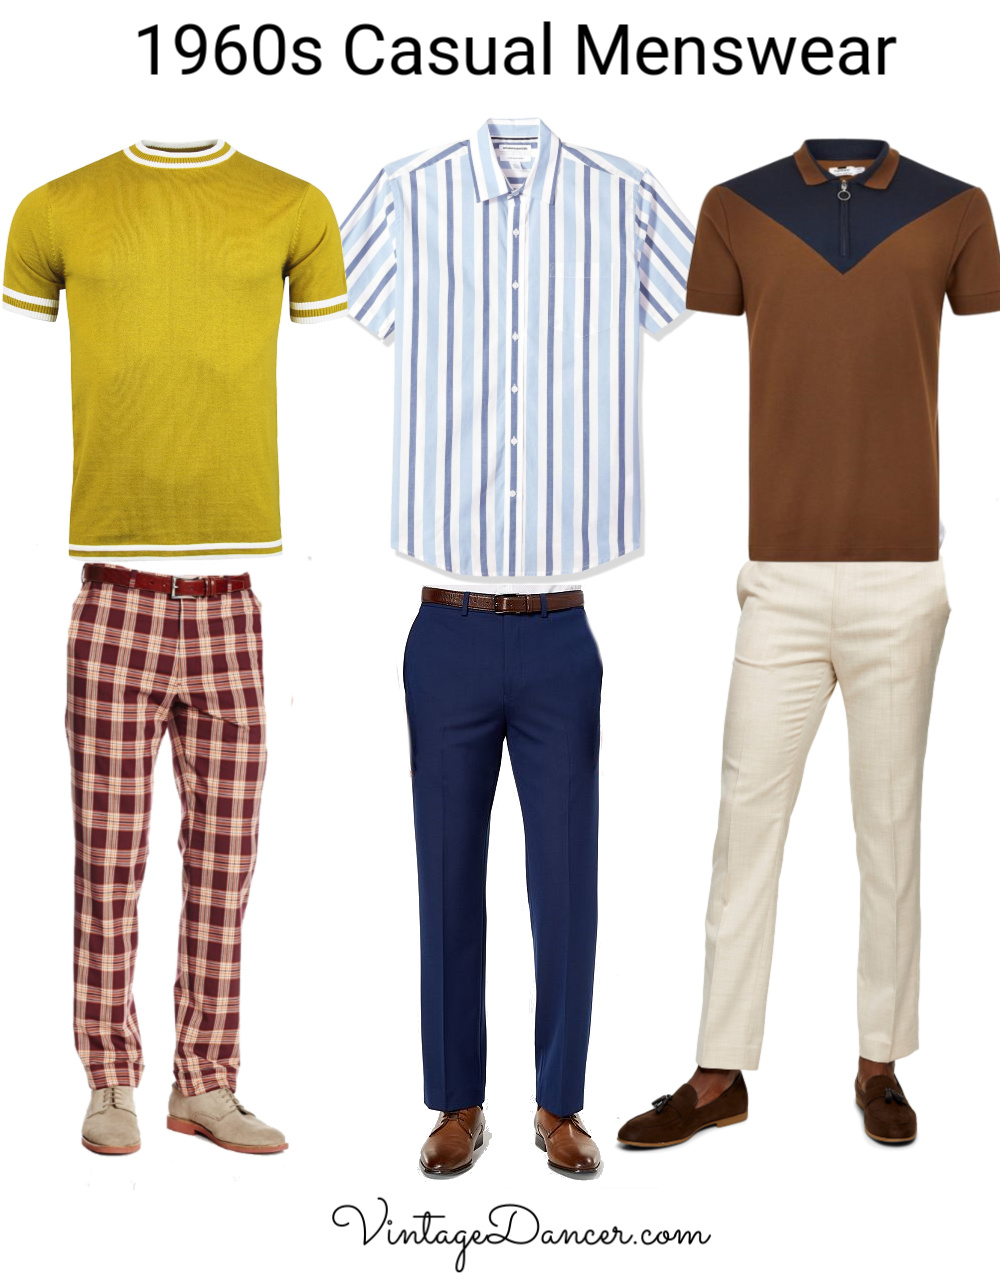 1960s Men's Clothing & Fashion